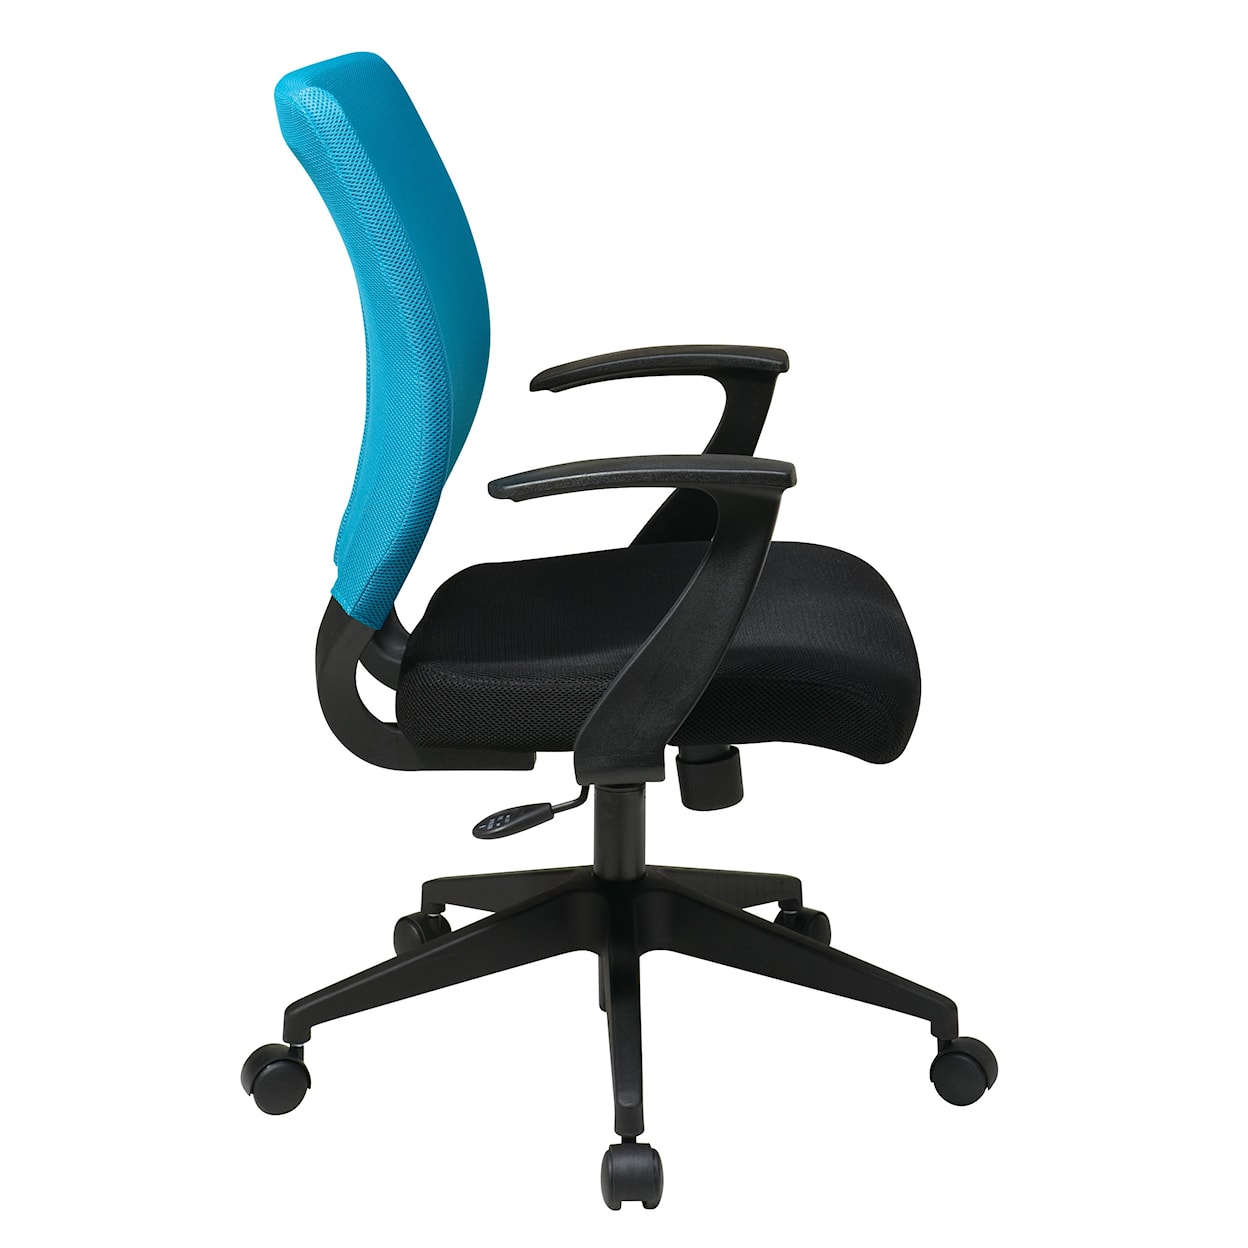 Office Star EM Series Office Chair